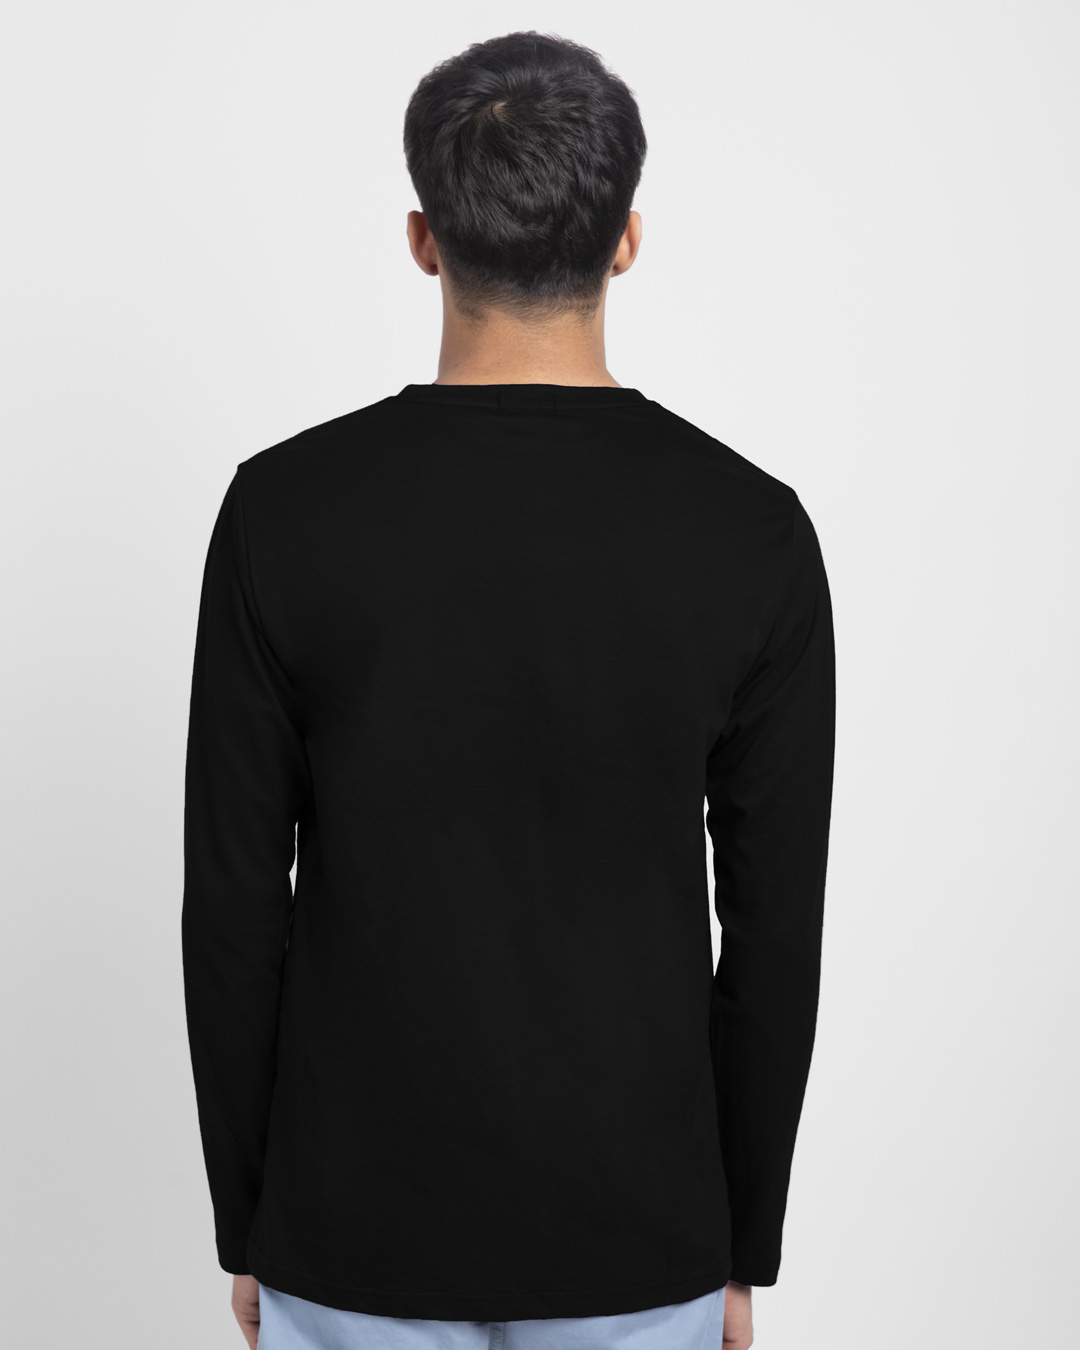 Shop Toxic Human Full Sleeve T-Shirt Black-Back